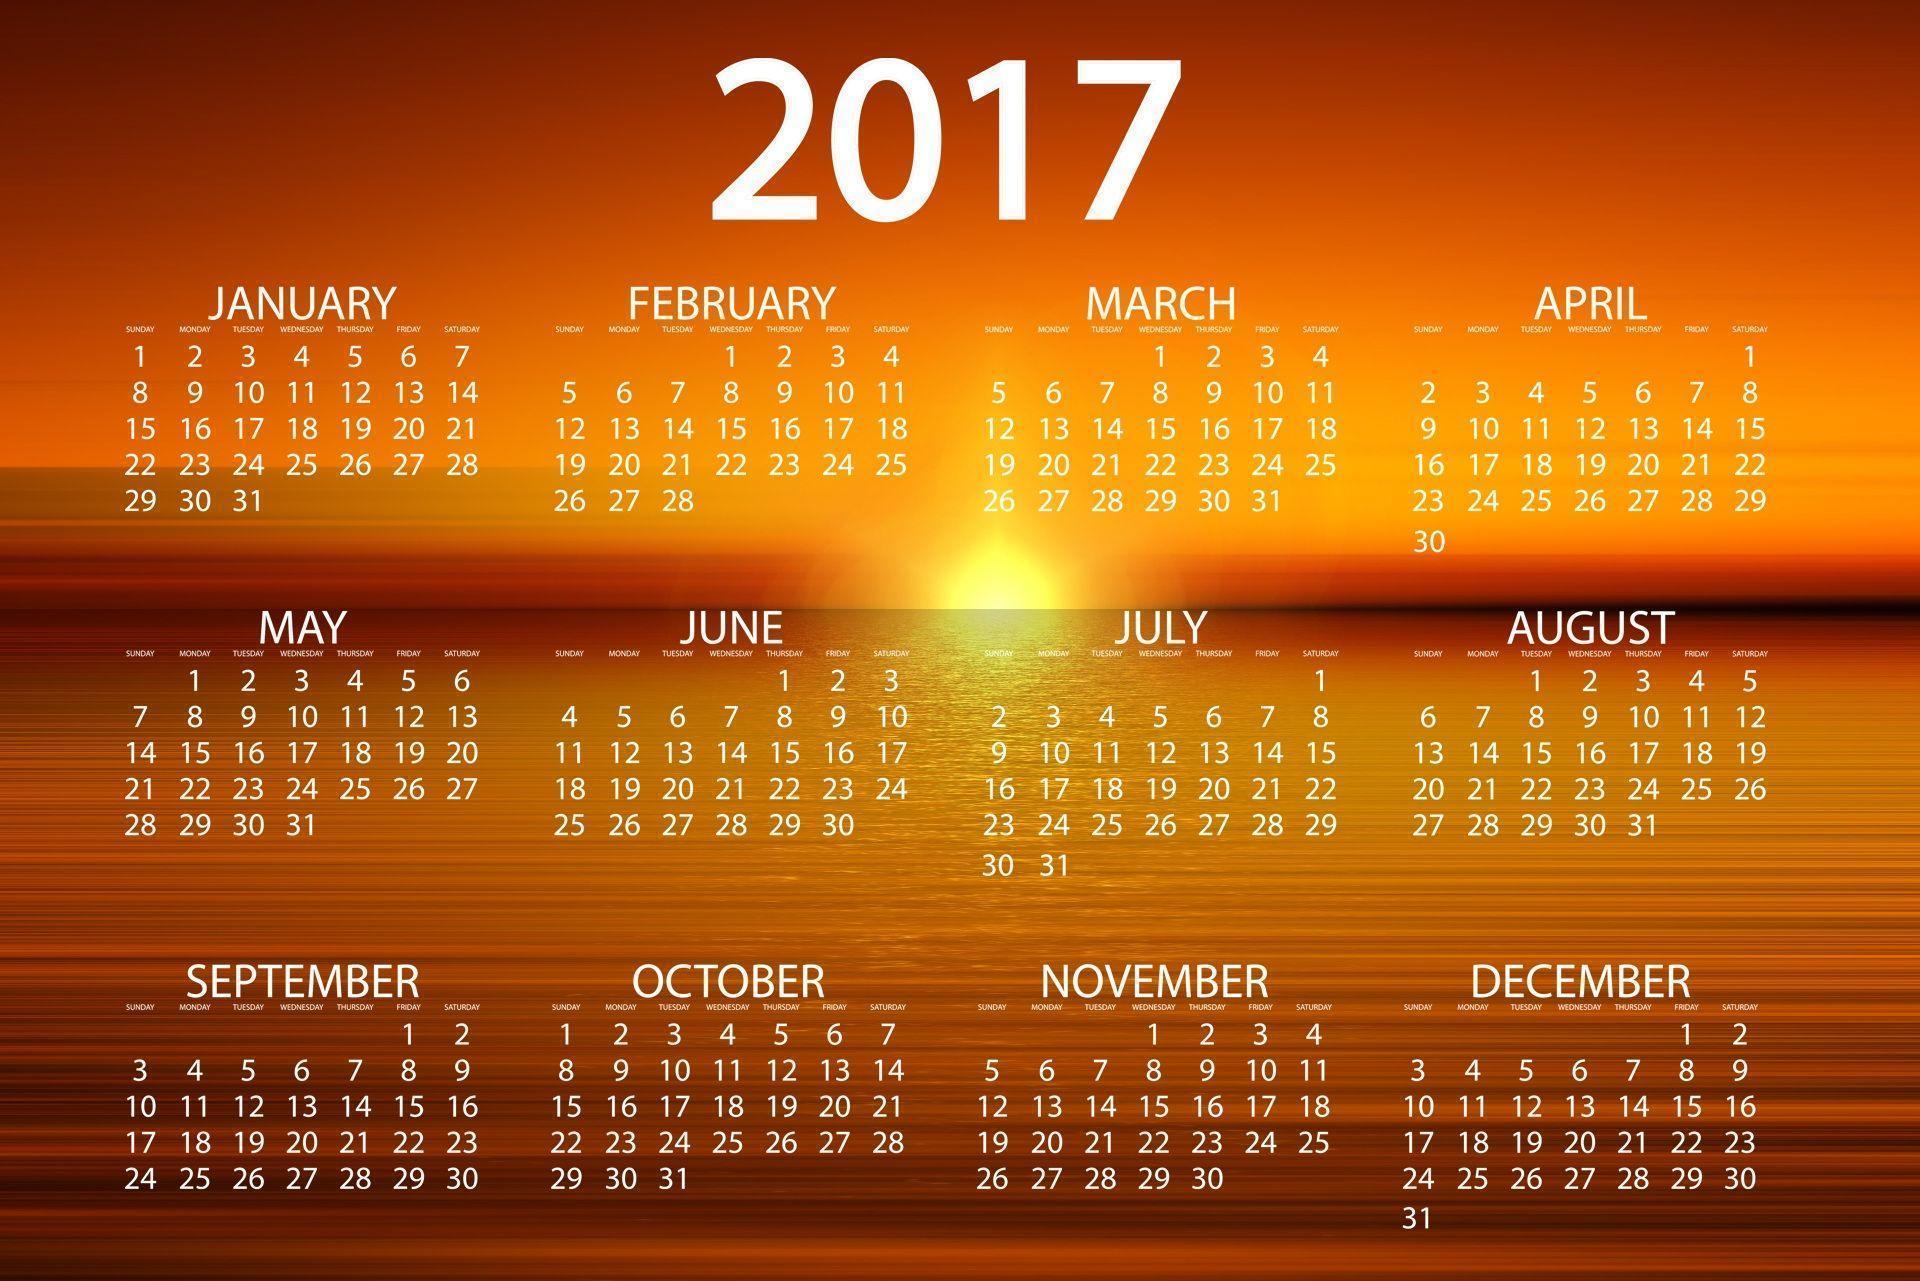 2017 calendar Computer Wallpapers, Desktop Backgrounds